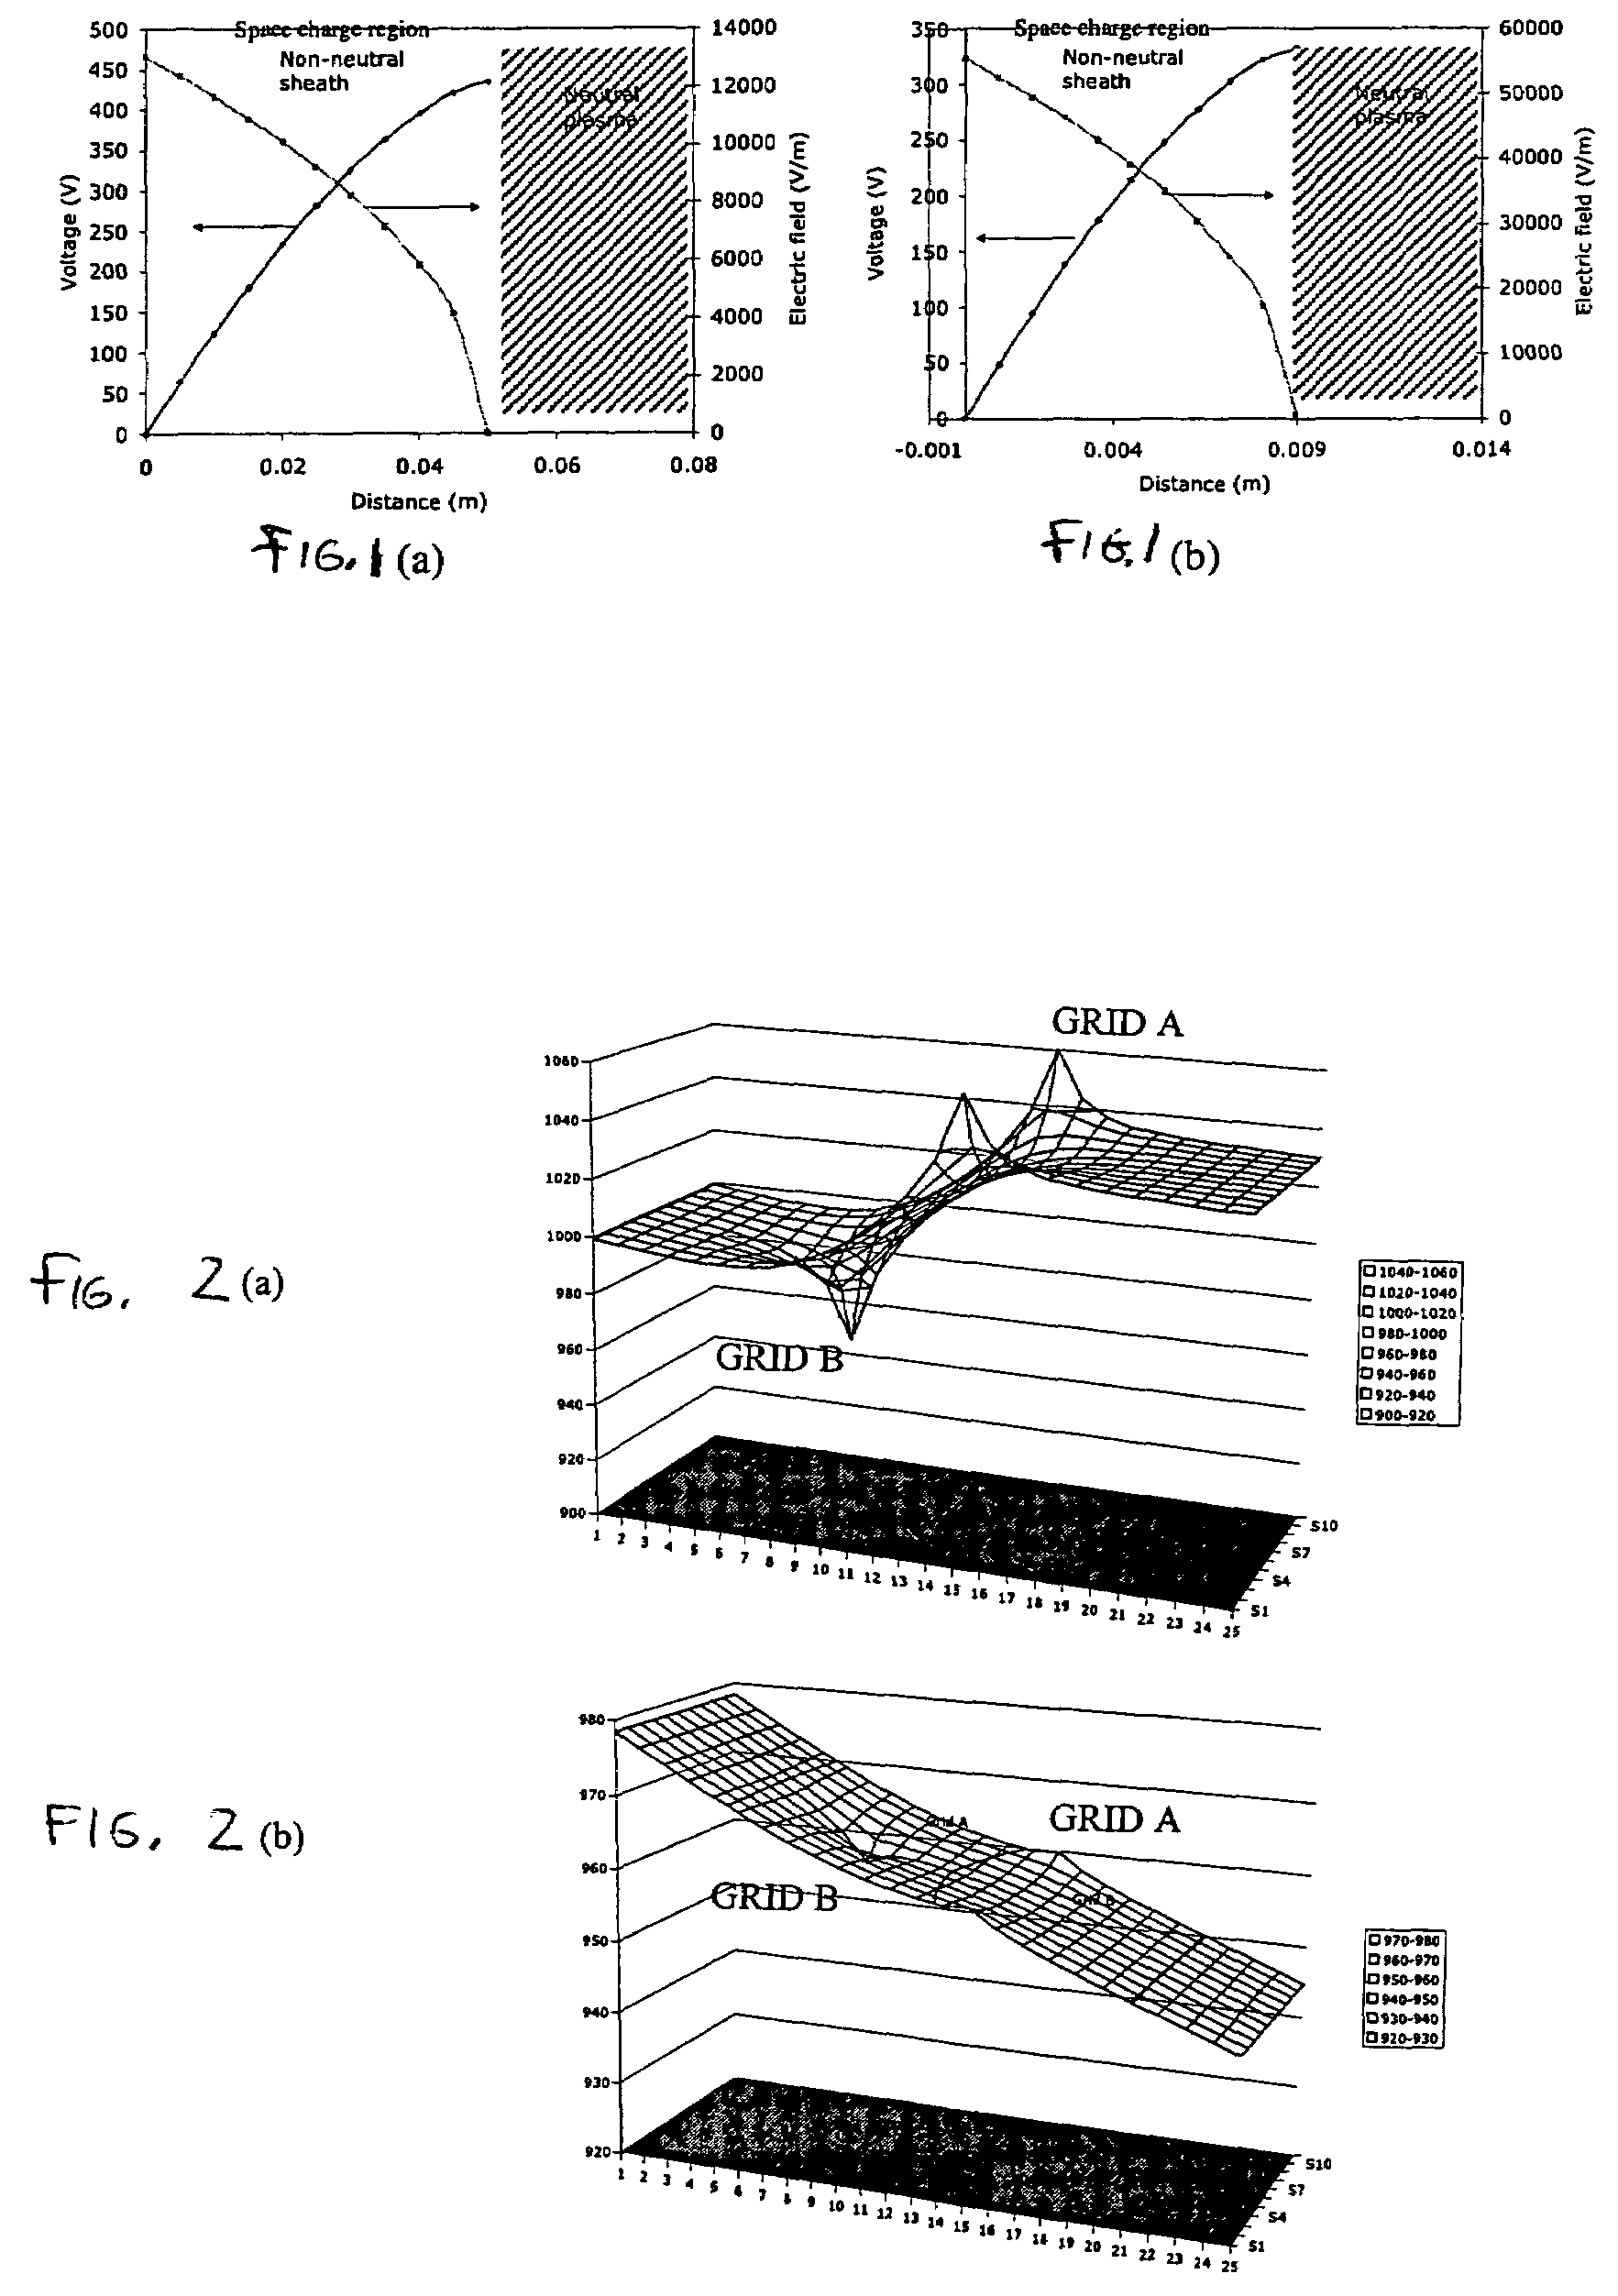 Plasma ion mobility spectrometer